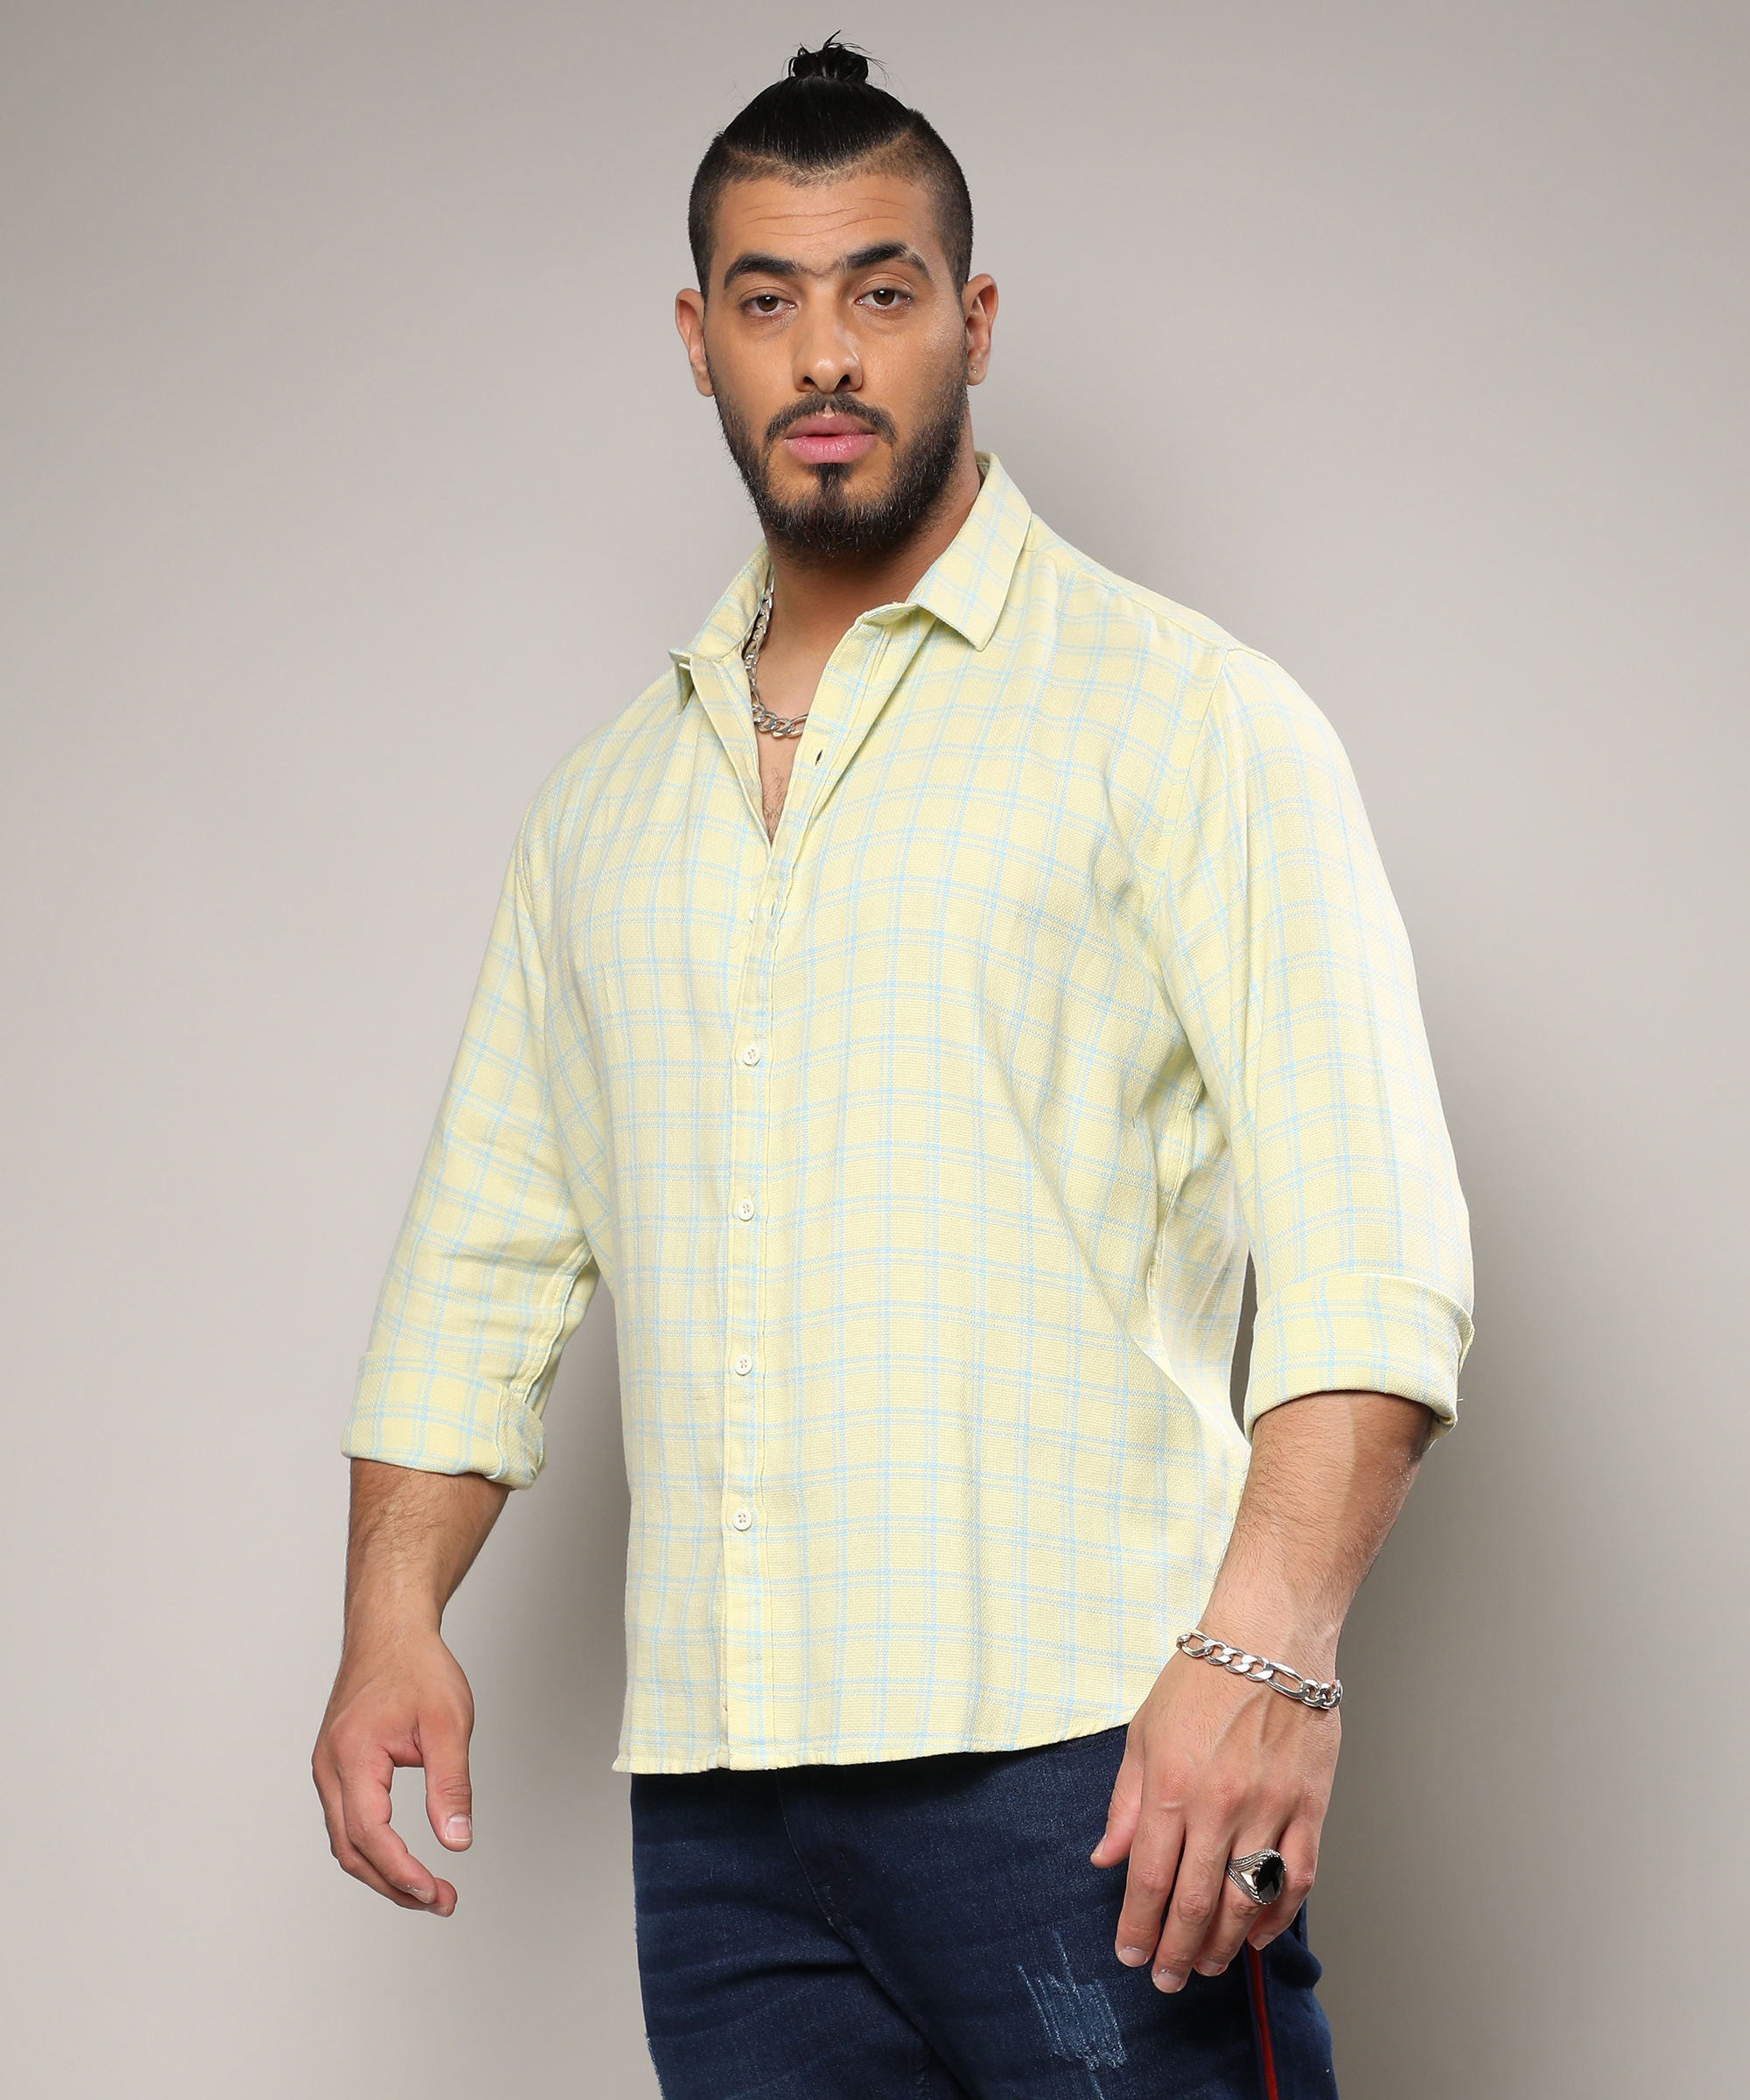 Instafab Plus | Men's Lemon Yellow Tartan Plaid Shirt